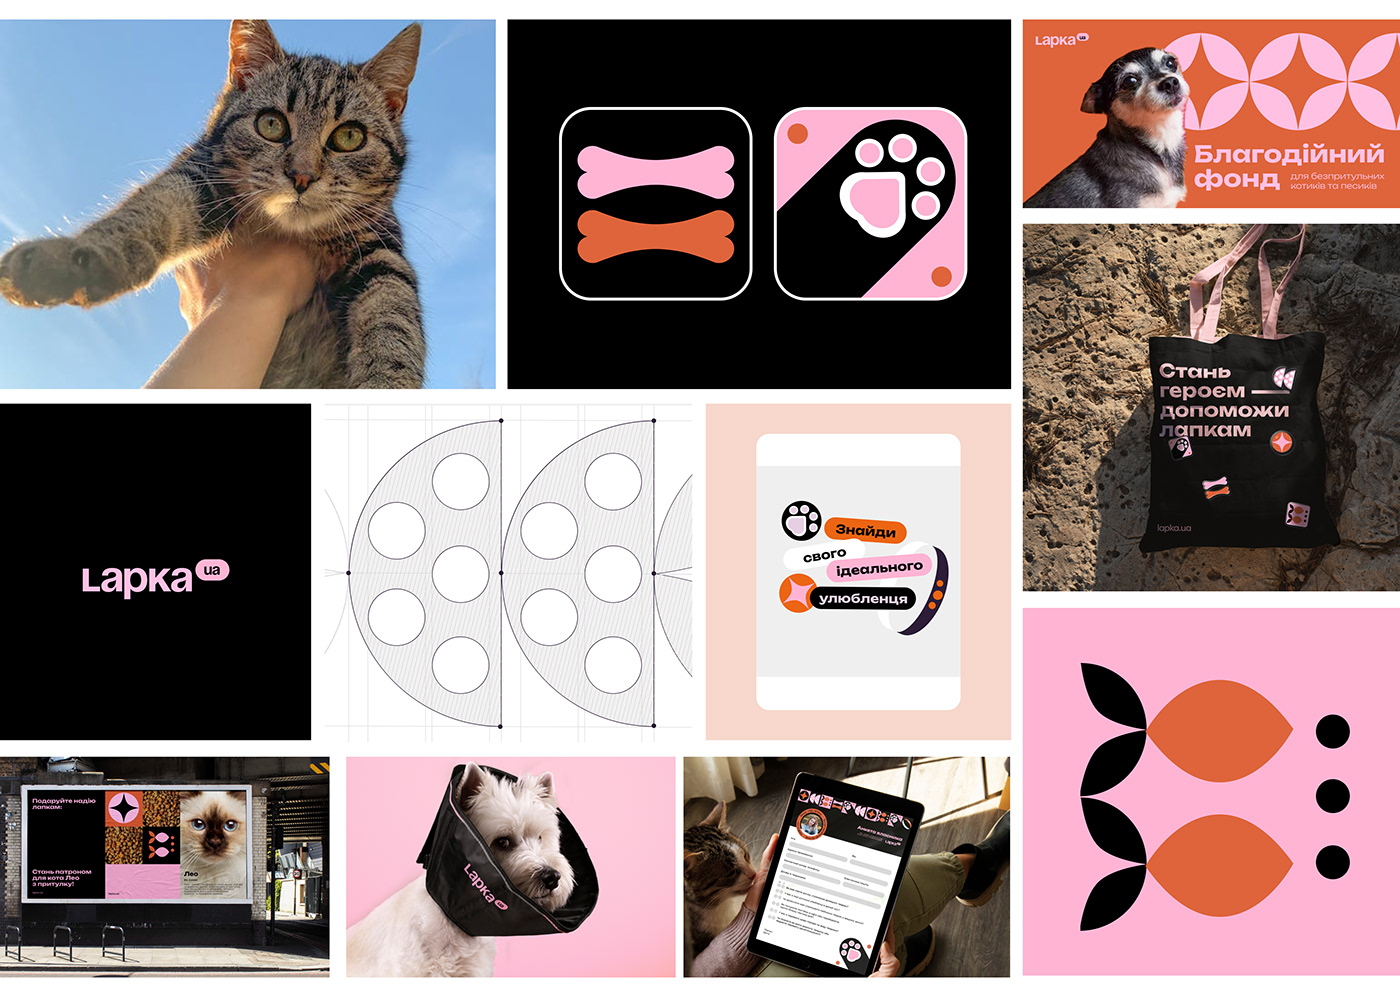 animals charity brand identity visual pets cute